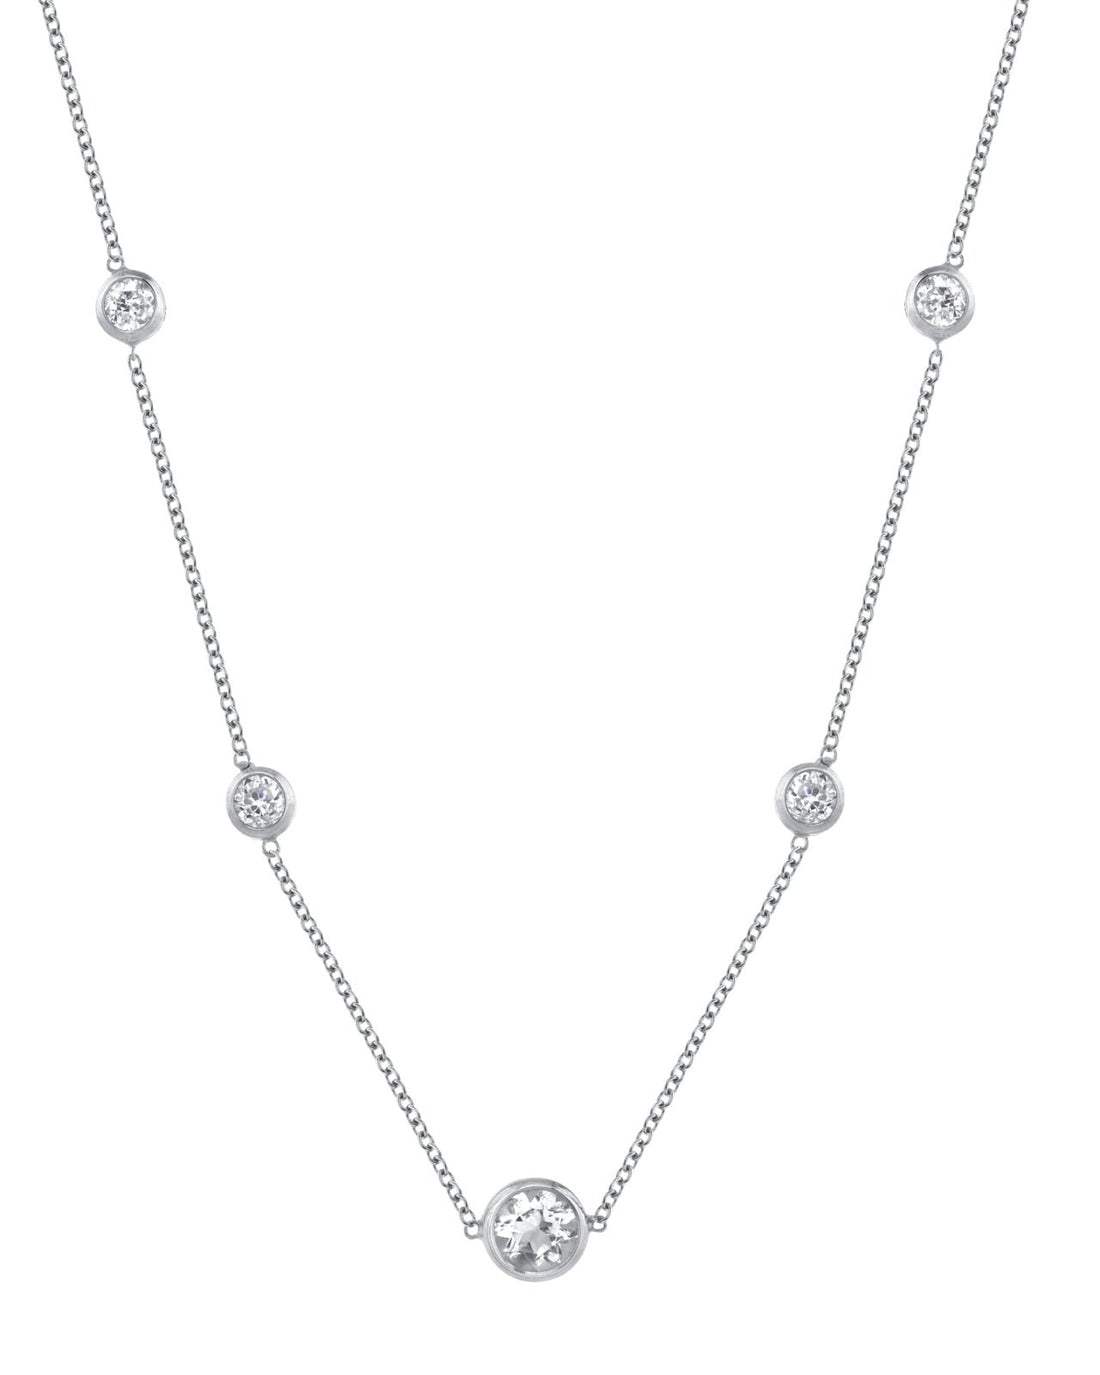 Elegance White Sapphires - Ele Keats Jewelry